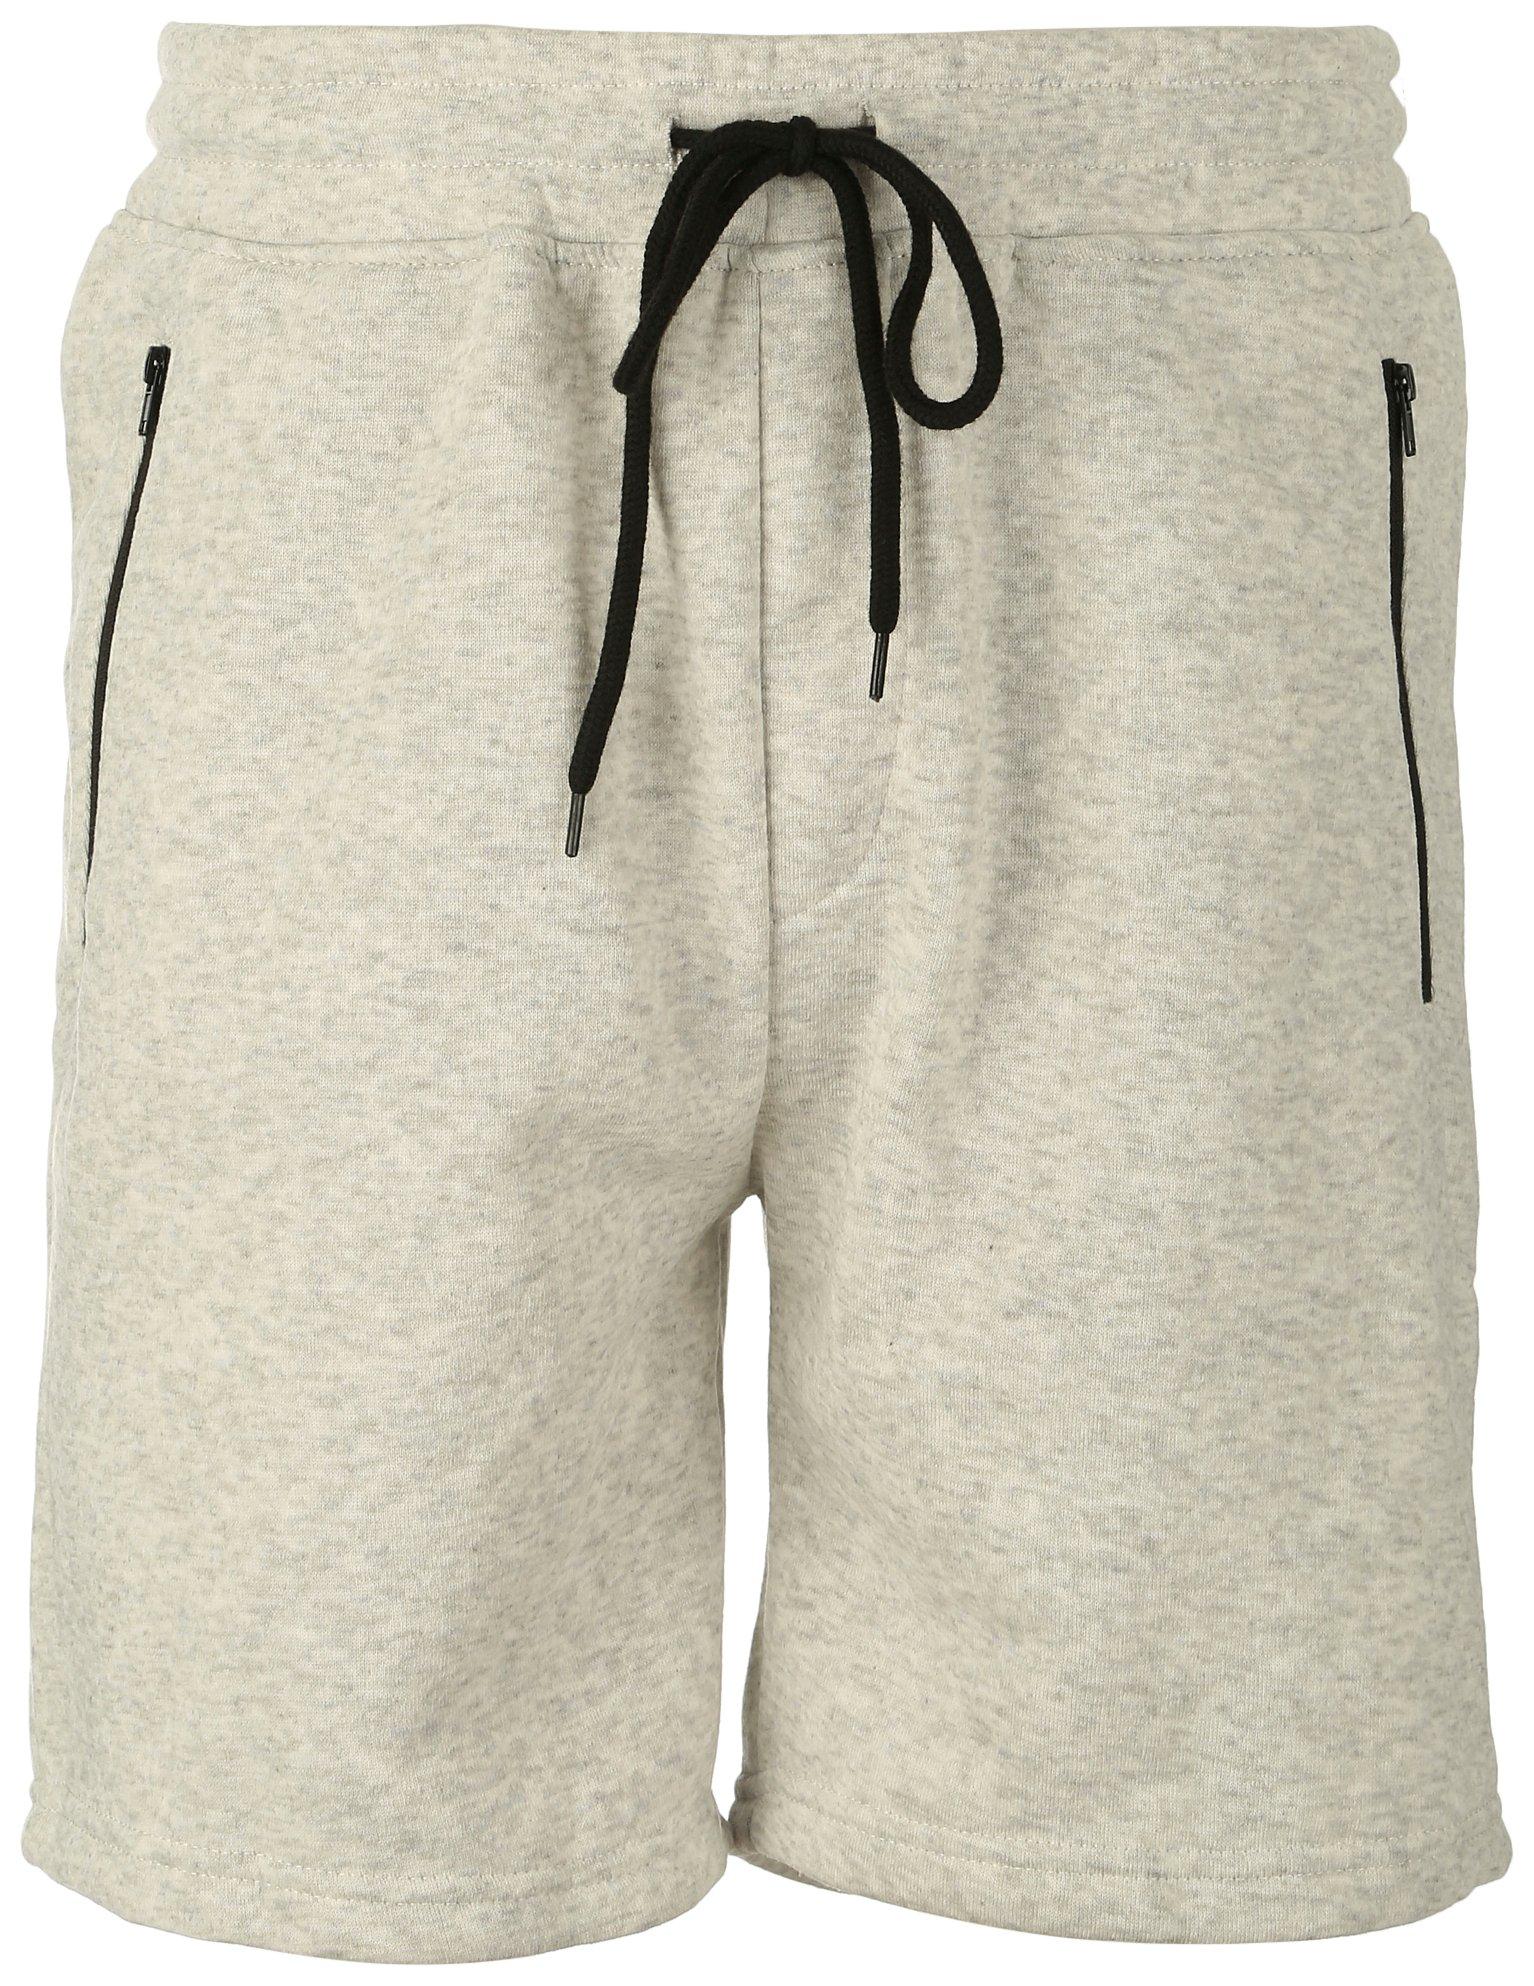 BROOKLYN CLOTH Mens 5 in. Fleece Core Shorts